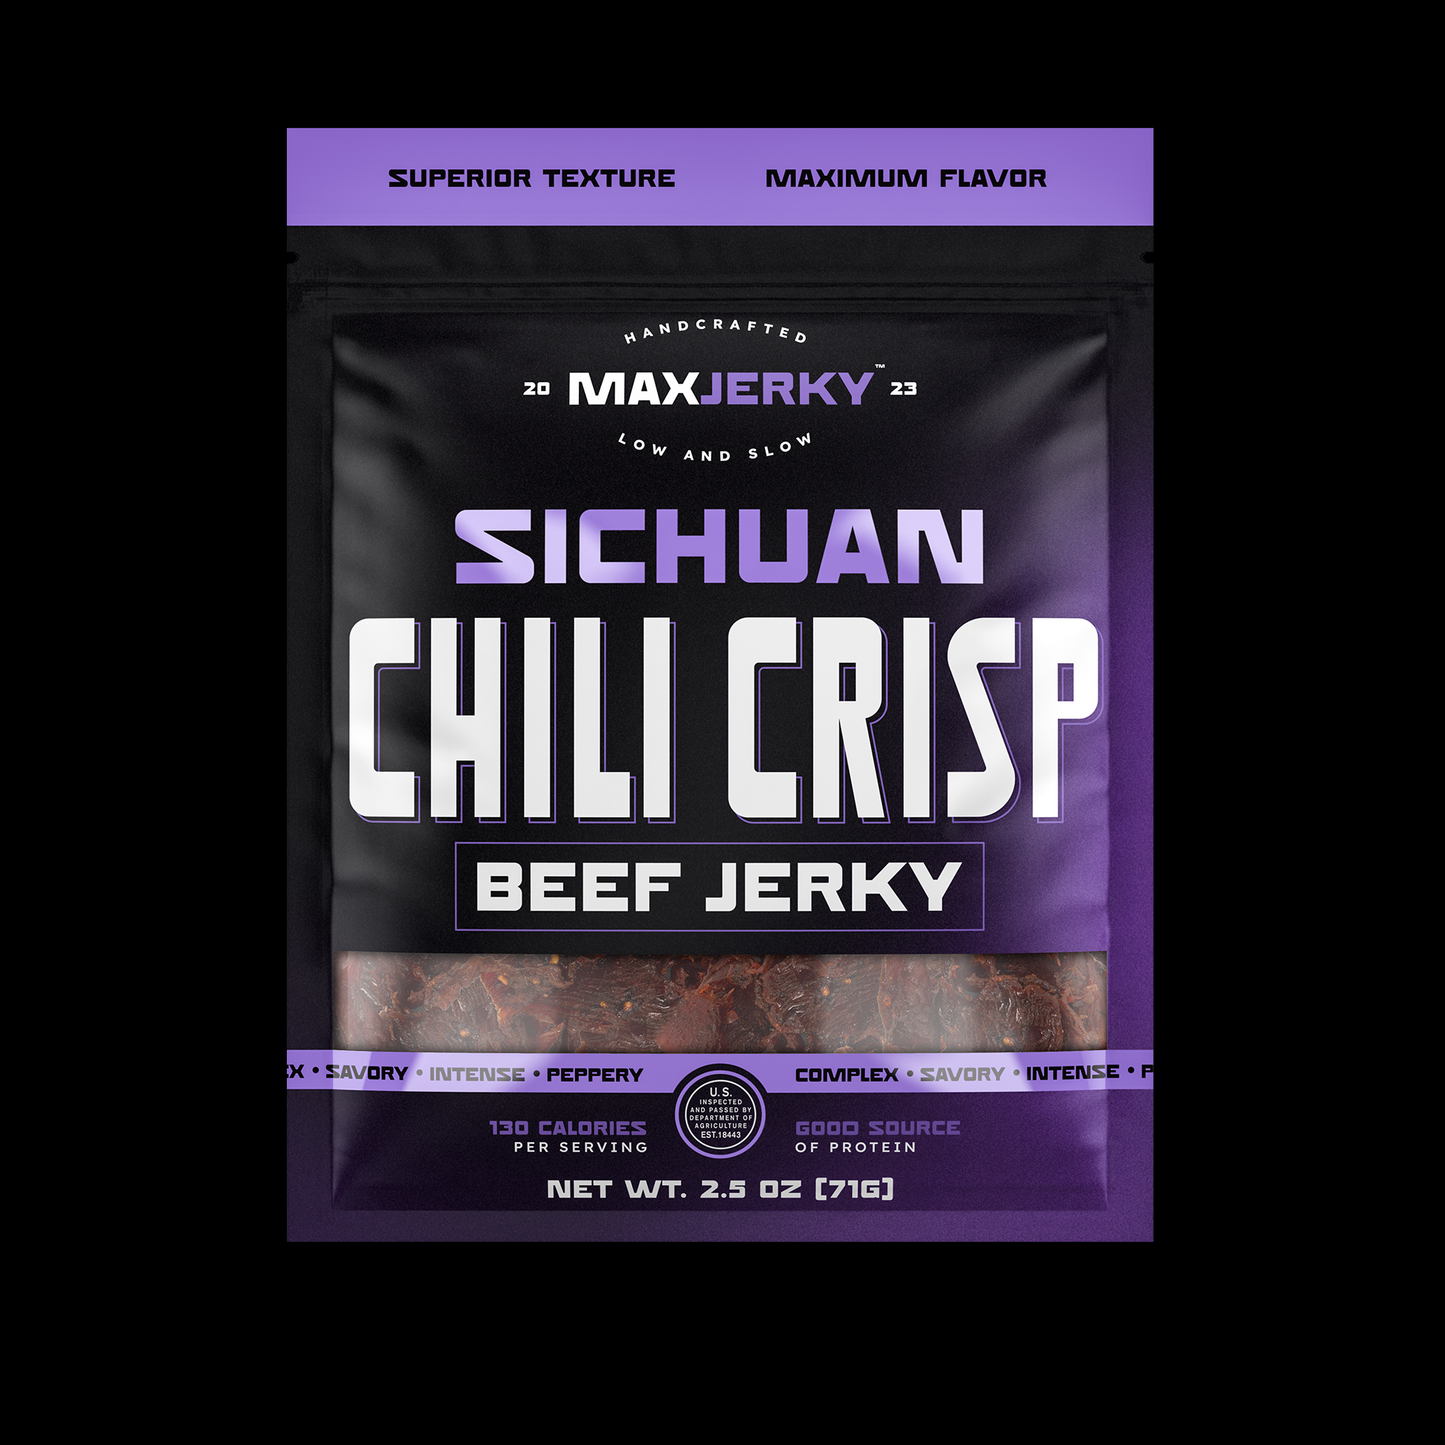 Sichuan Chili Crisp Beef Jerky